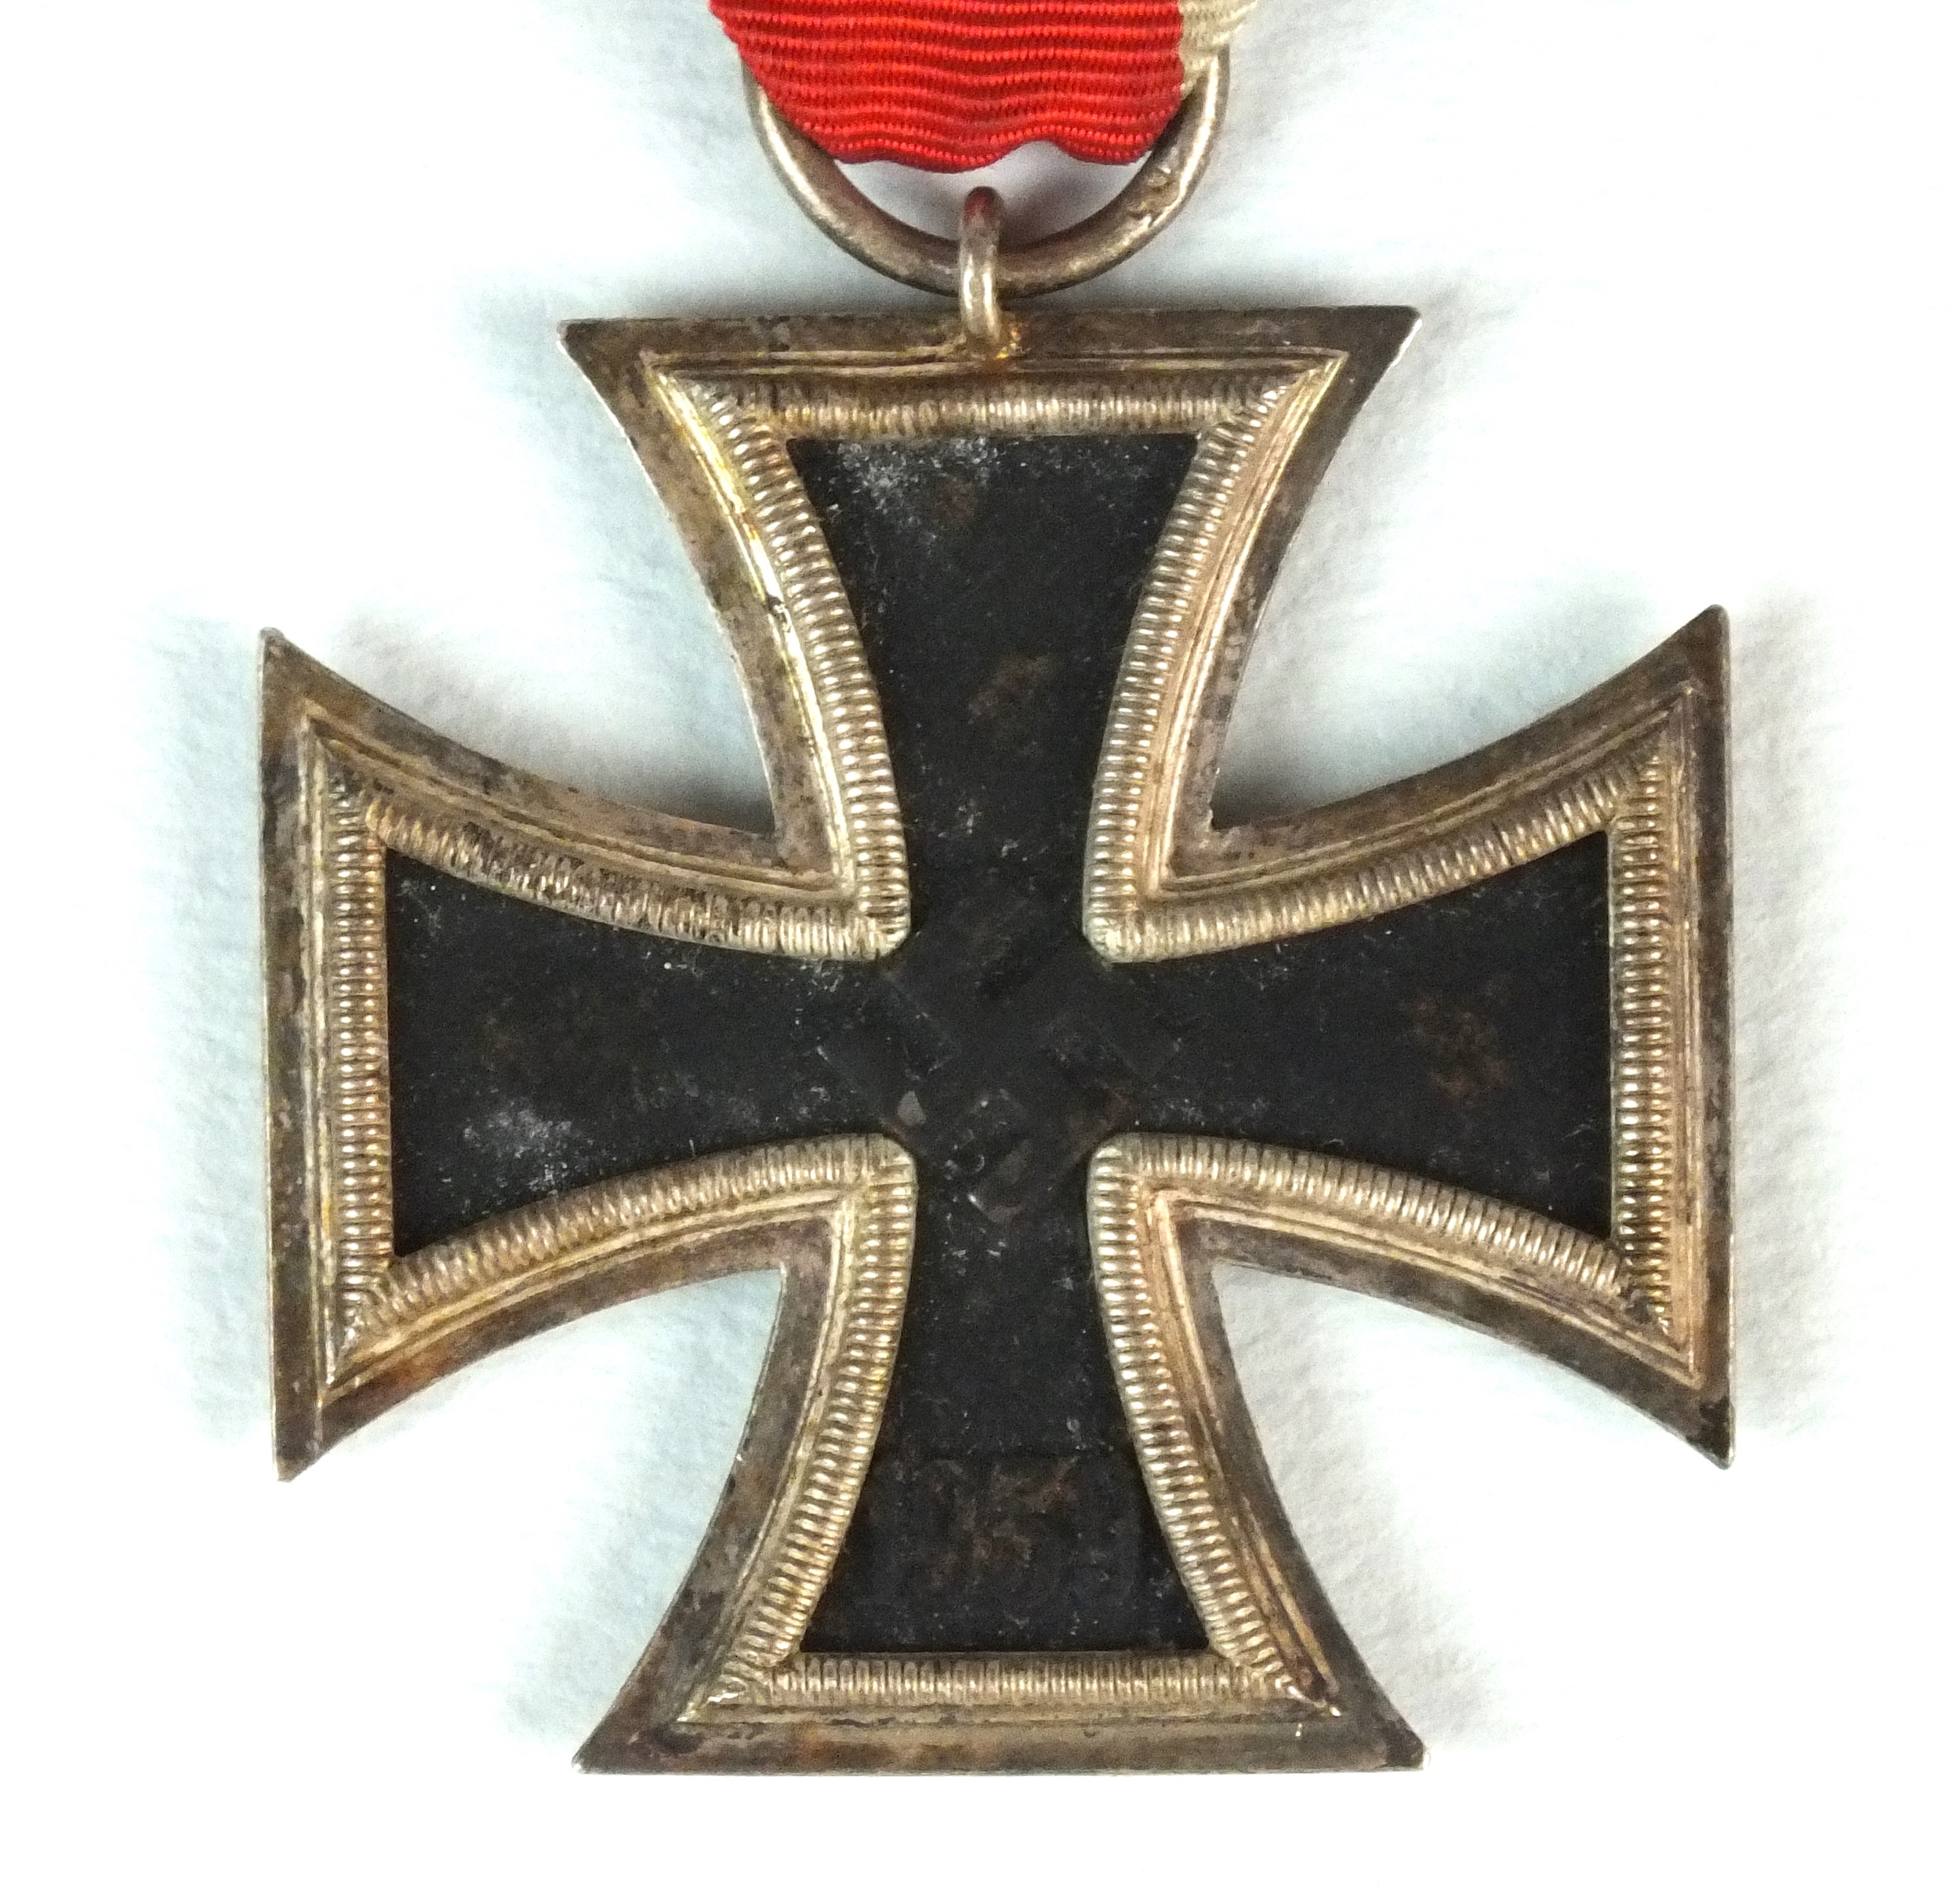 A German Third Reich 1939 Iron Cross, 2nd class - Image 2 of 3